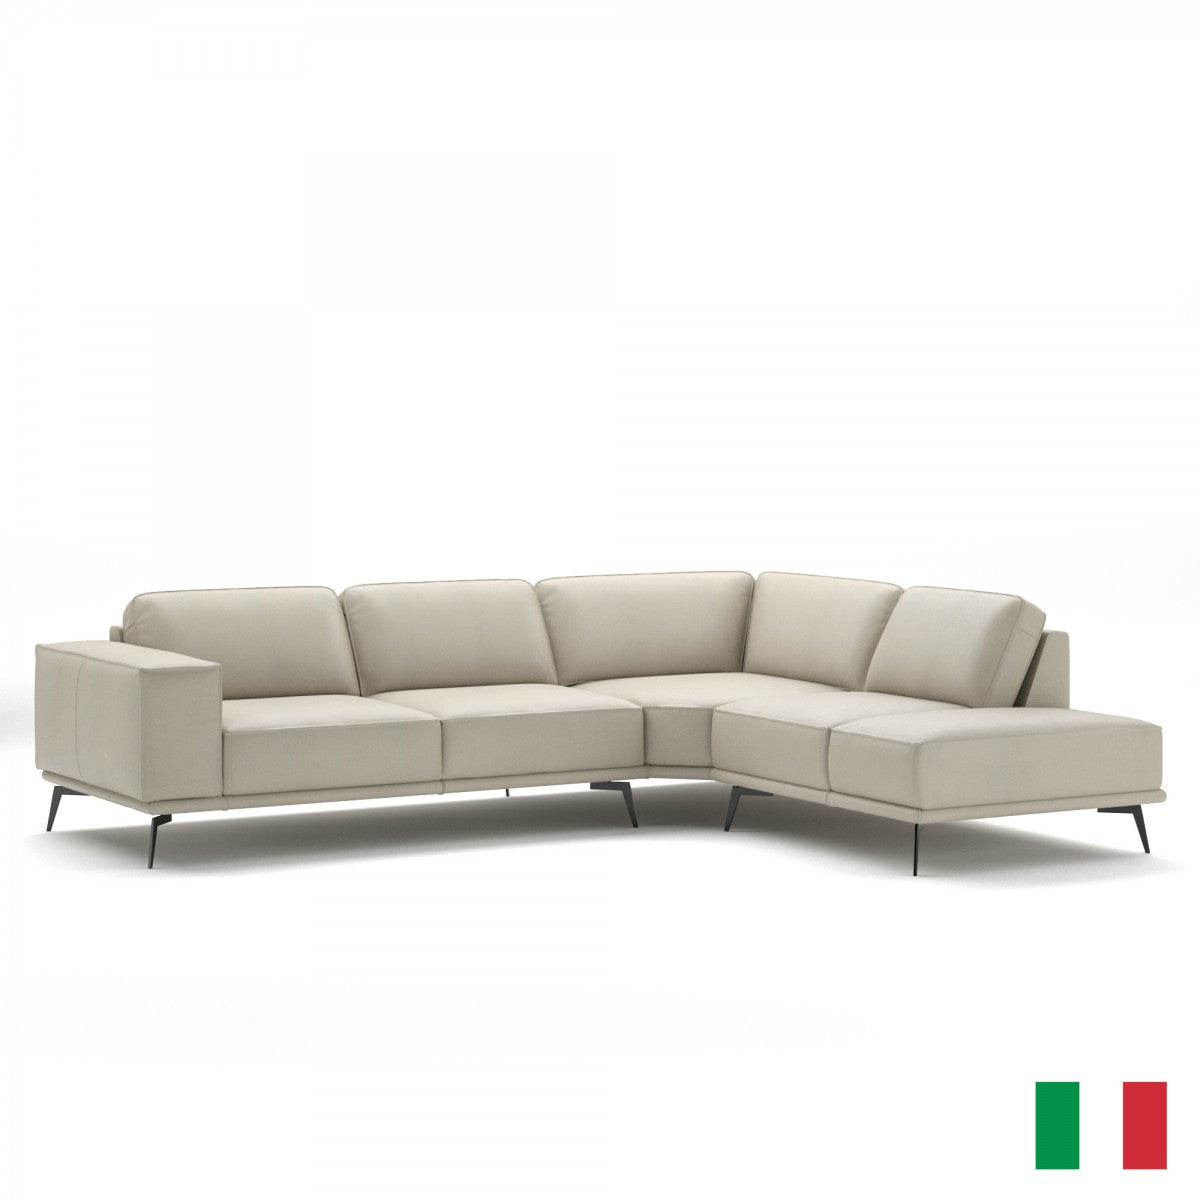 Coronelli Collezioni Soho - Italian RAF Light Grey Leather Sectional Sofa